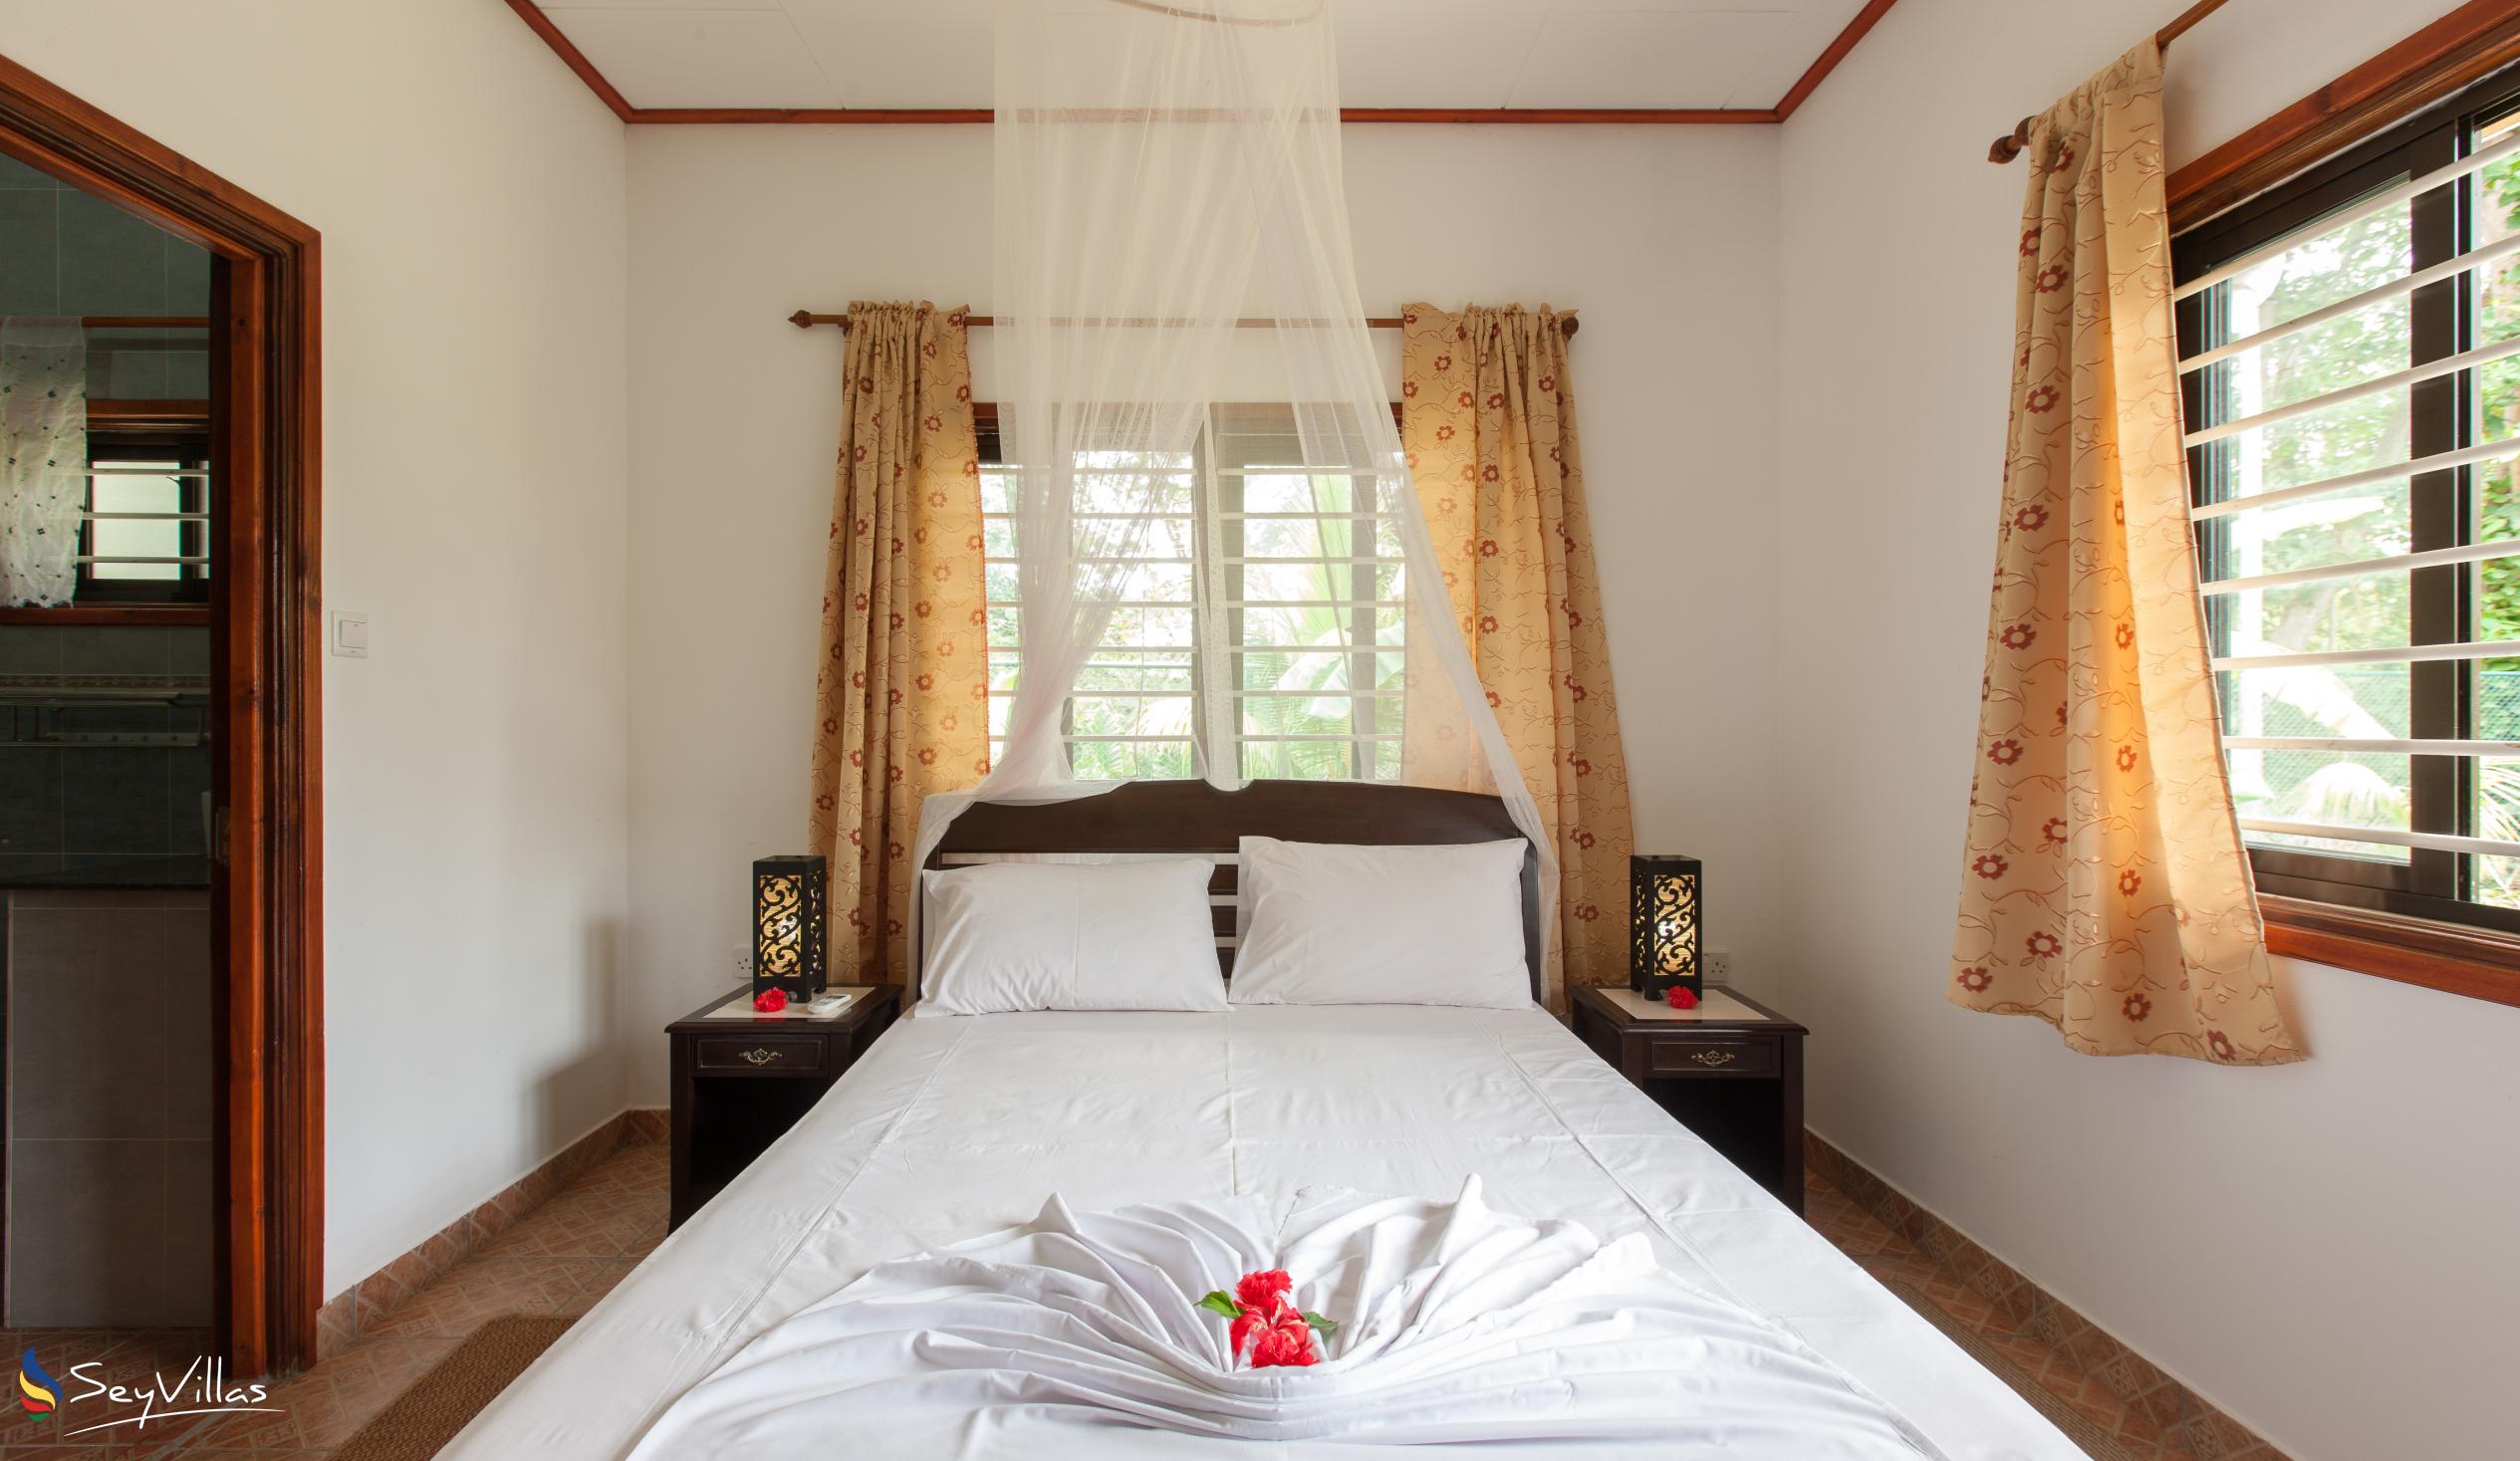 Foto 58: Zerof Self Catering  Apartments - Appartement à 3 chambres - La Digue (Seychelles)